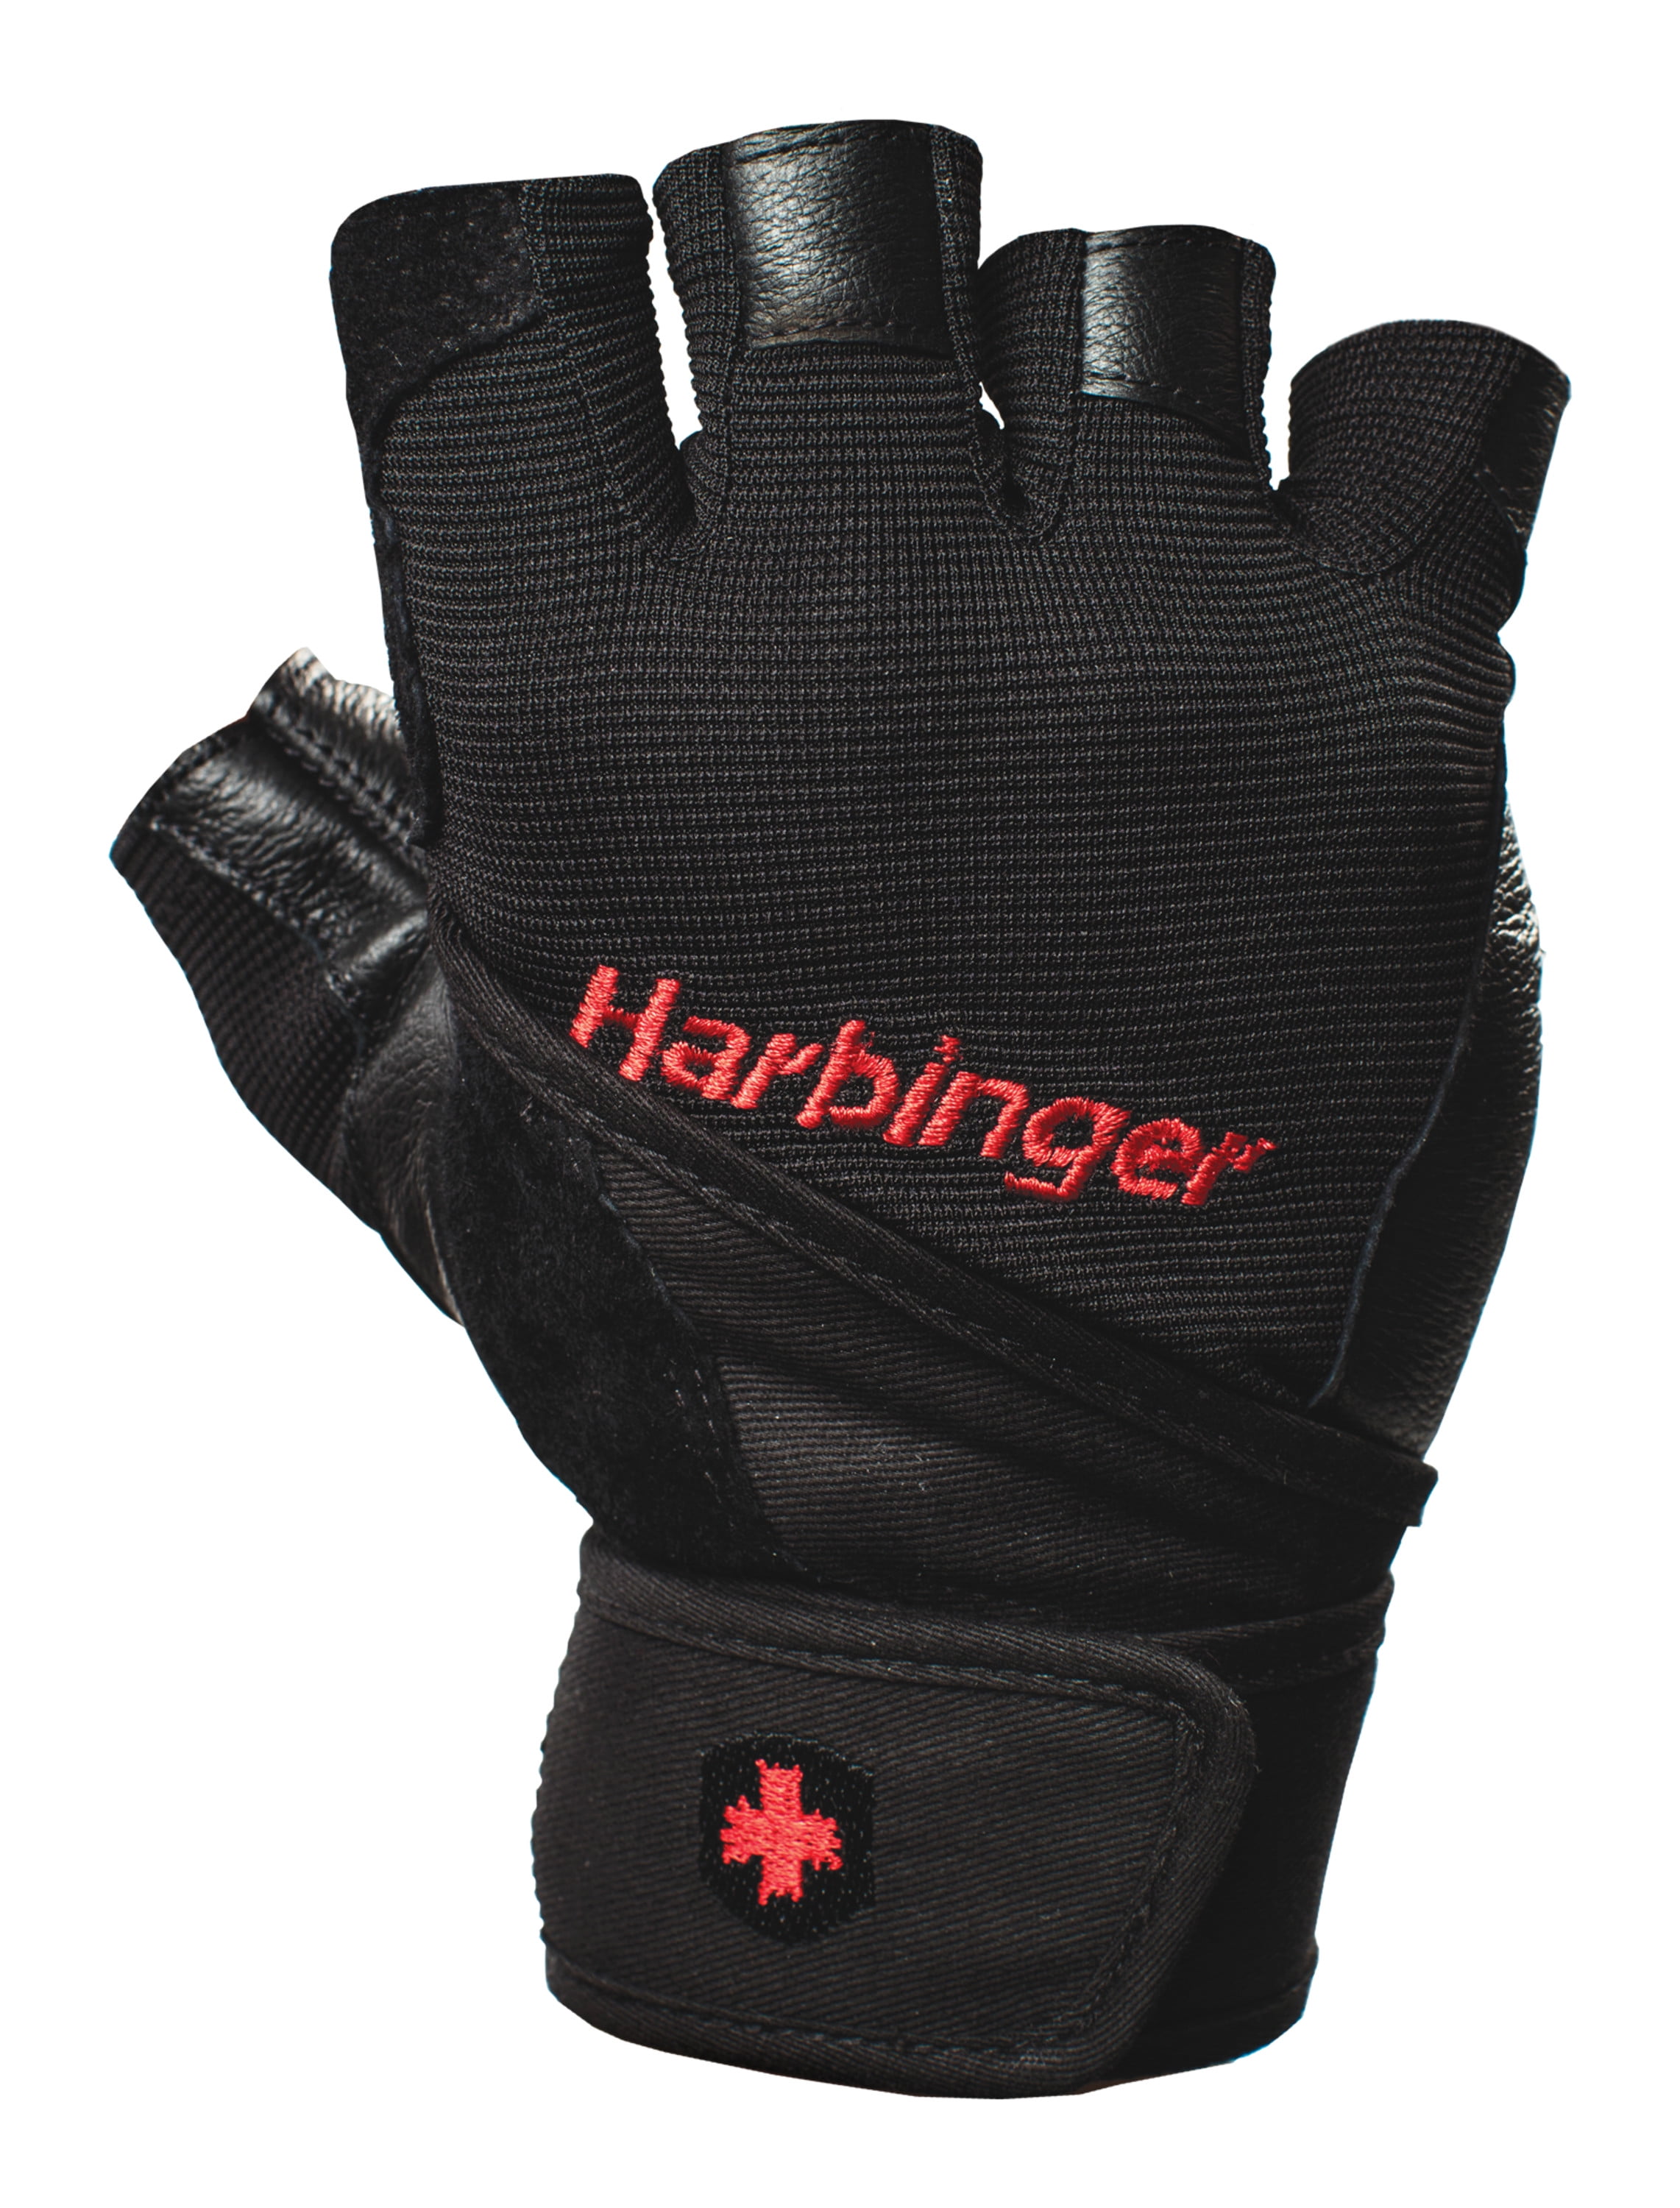 Black Harbinger BioFlex Elite Wrist Wrap Weight Lifting Gloves 